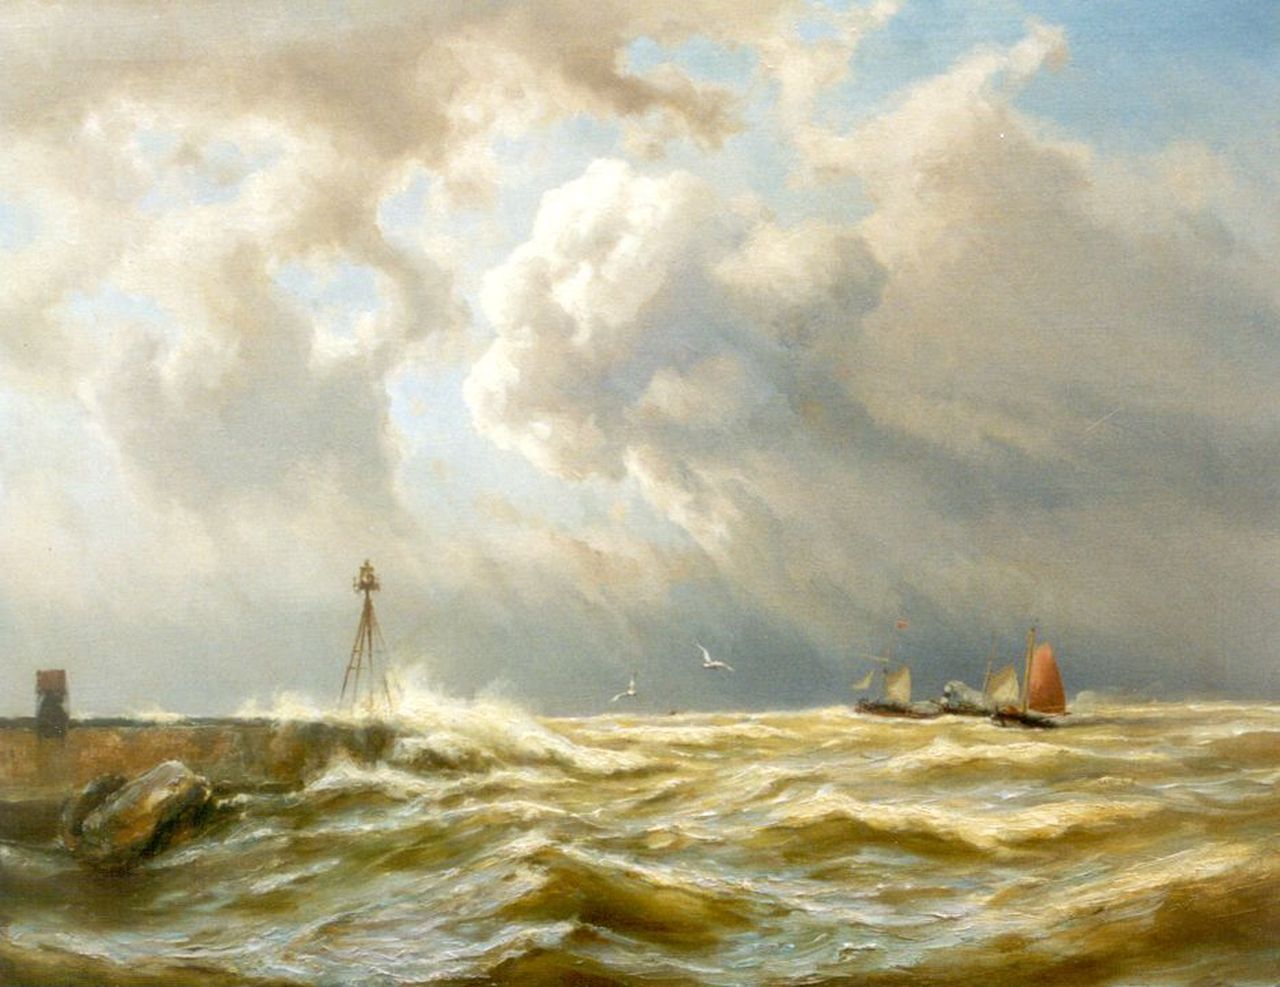 Koekkoek J.H.B.  | Johannes Hermanus Barend 'Jan H.B.' Koekkoek, Sailing vessels and a paddle-steamer on stormy seas near IJmuiden, oil on canvas 63.5 x 80.5 cm, signed l.l.